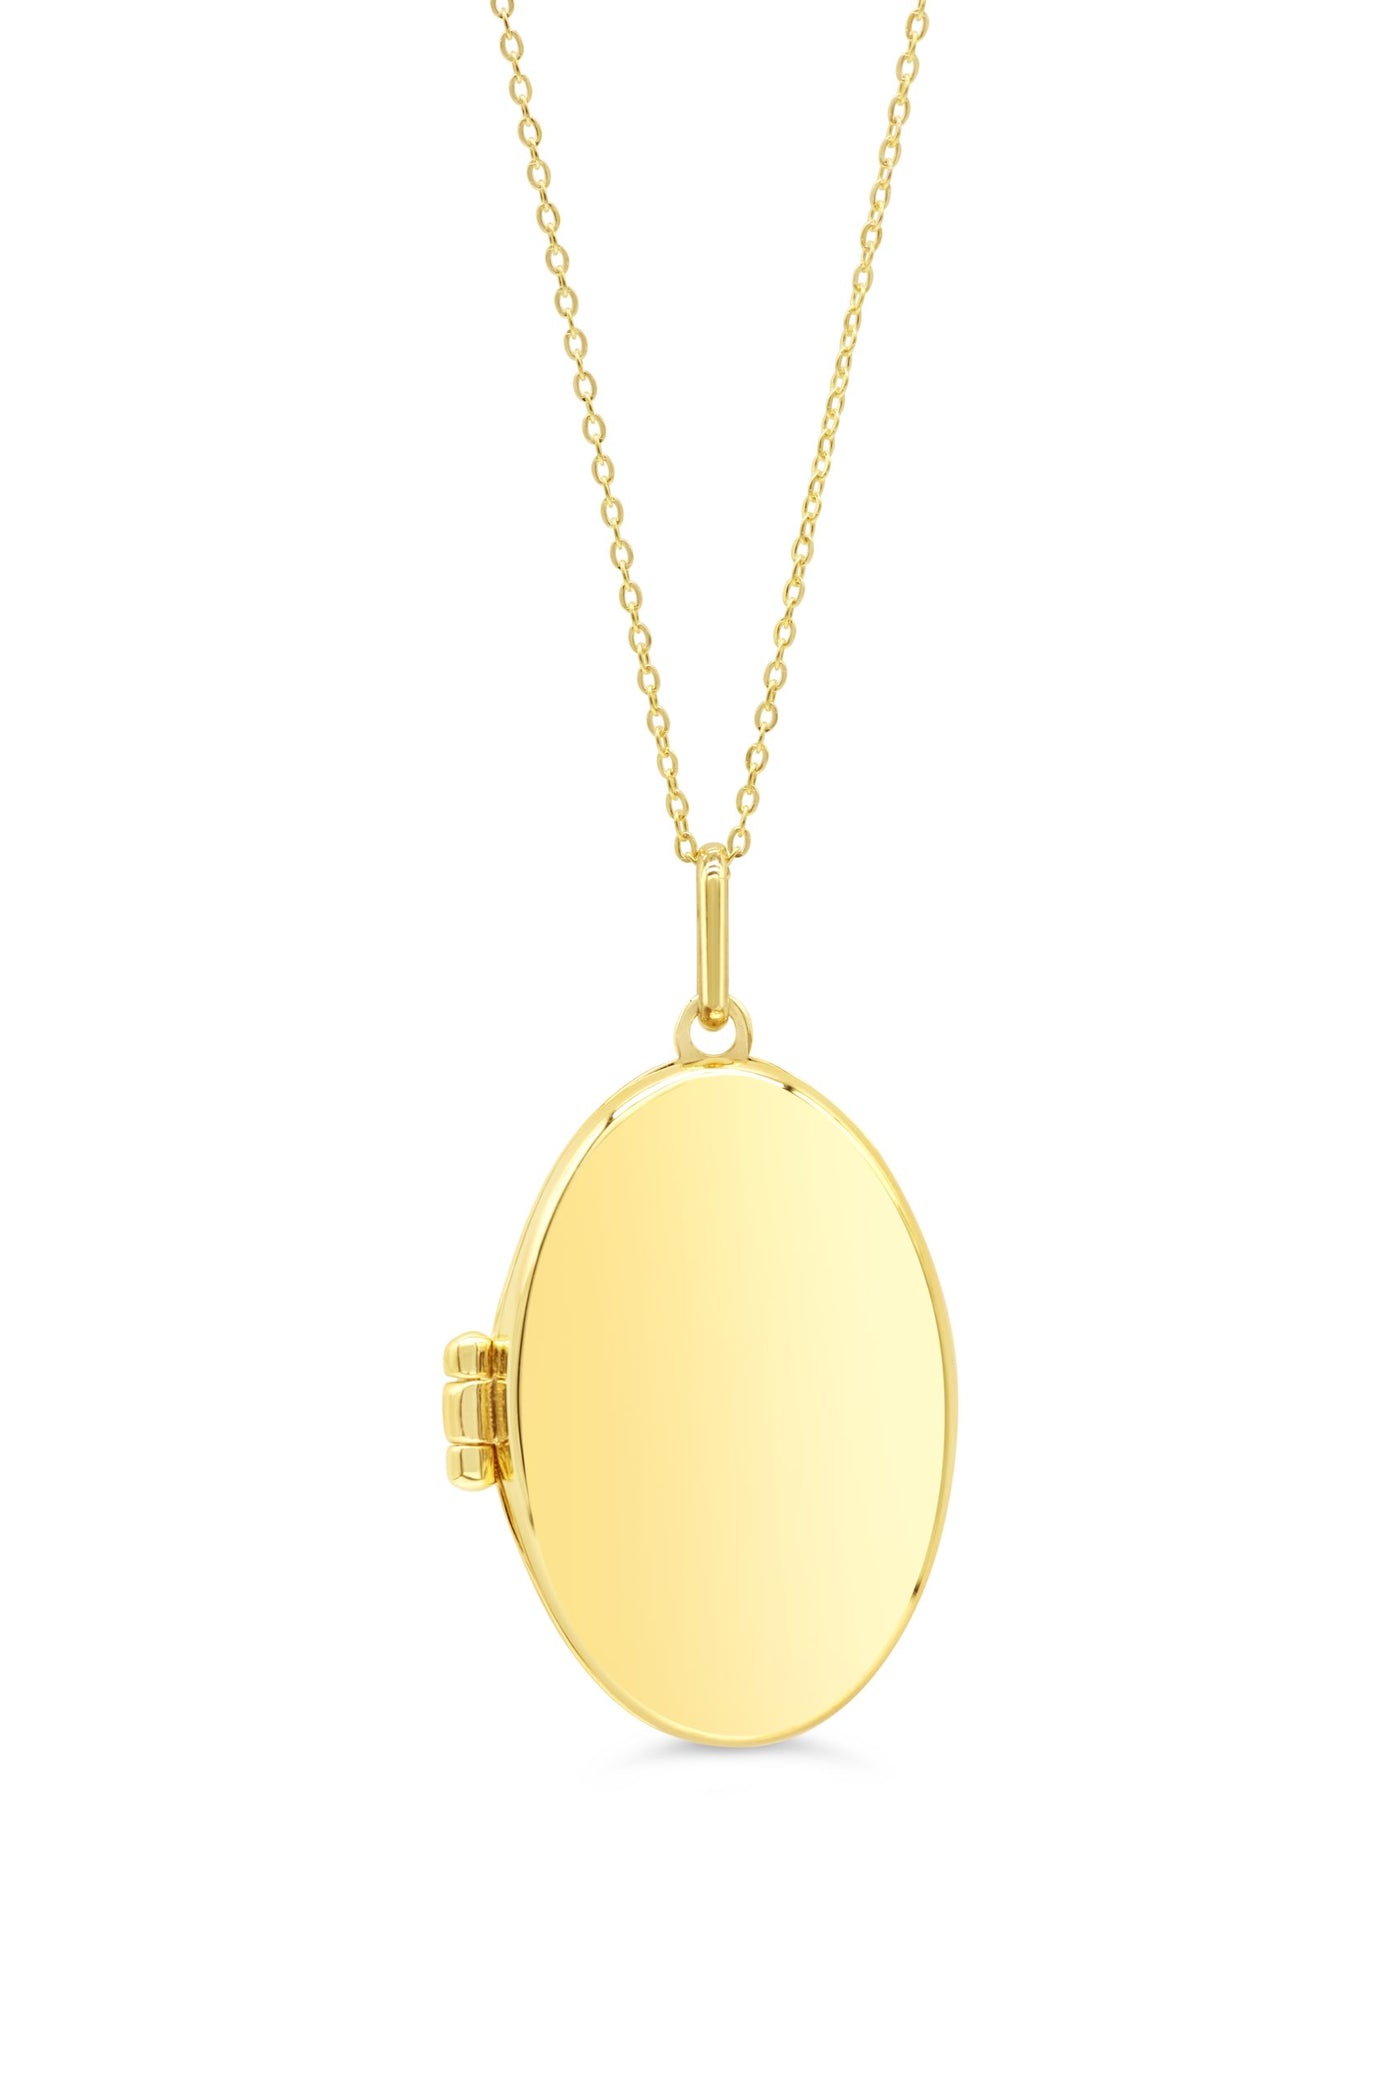 10 Karat Yellow Gold Oval Locket Necklace